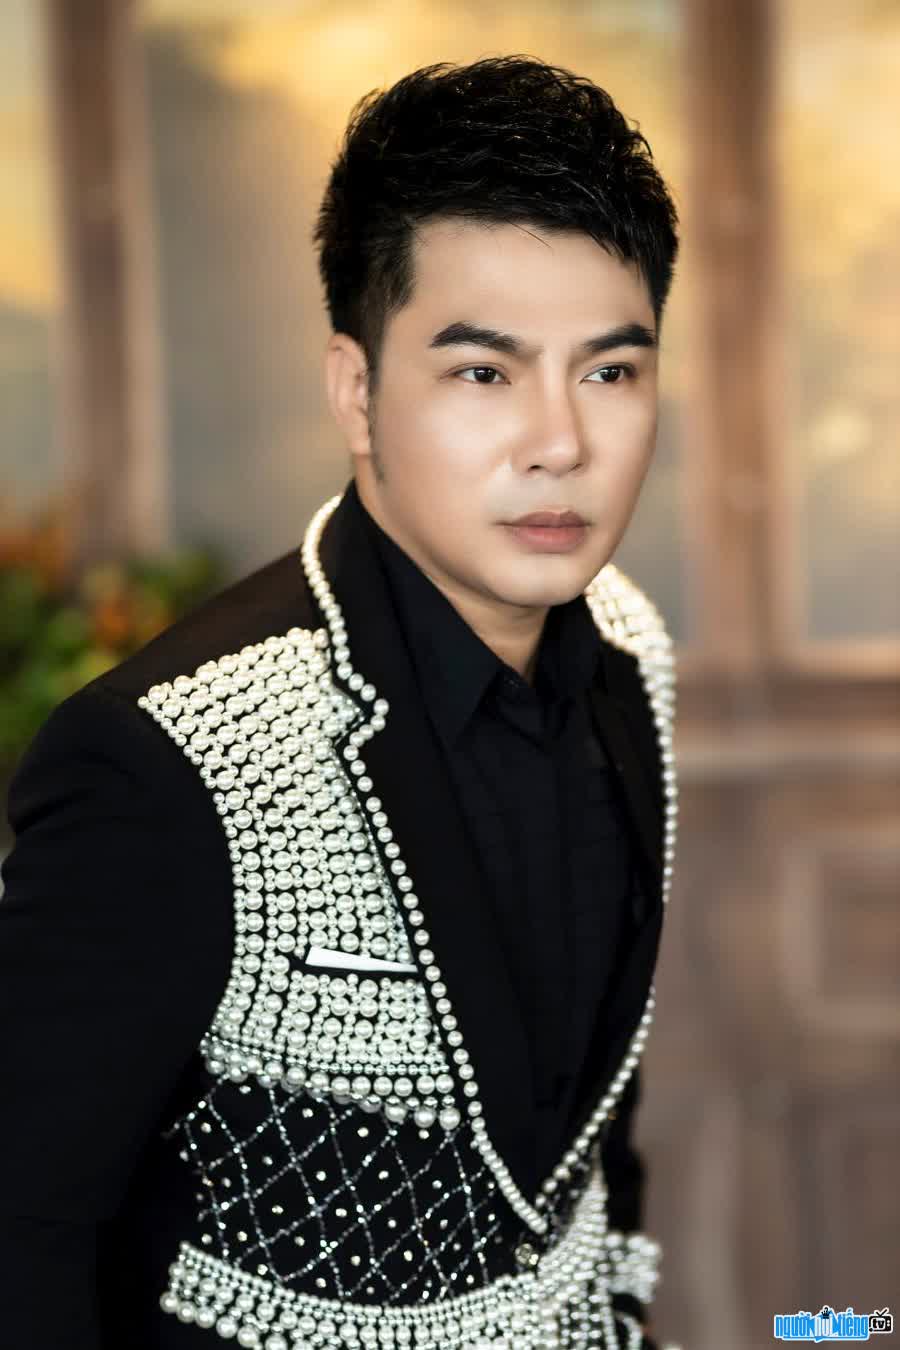 Latest image of singer Chau Tuan